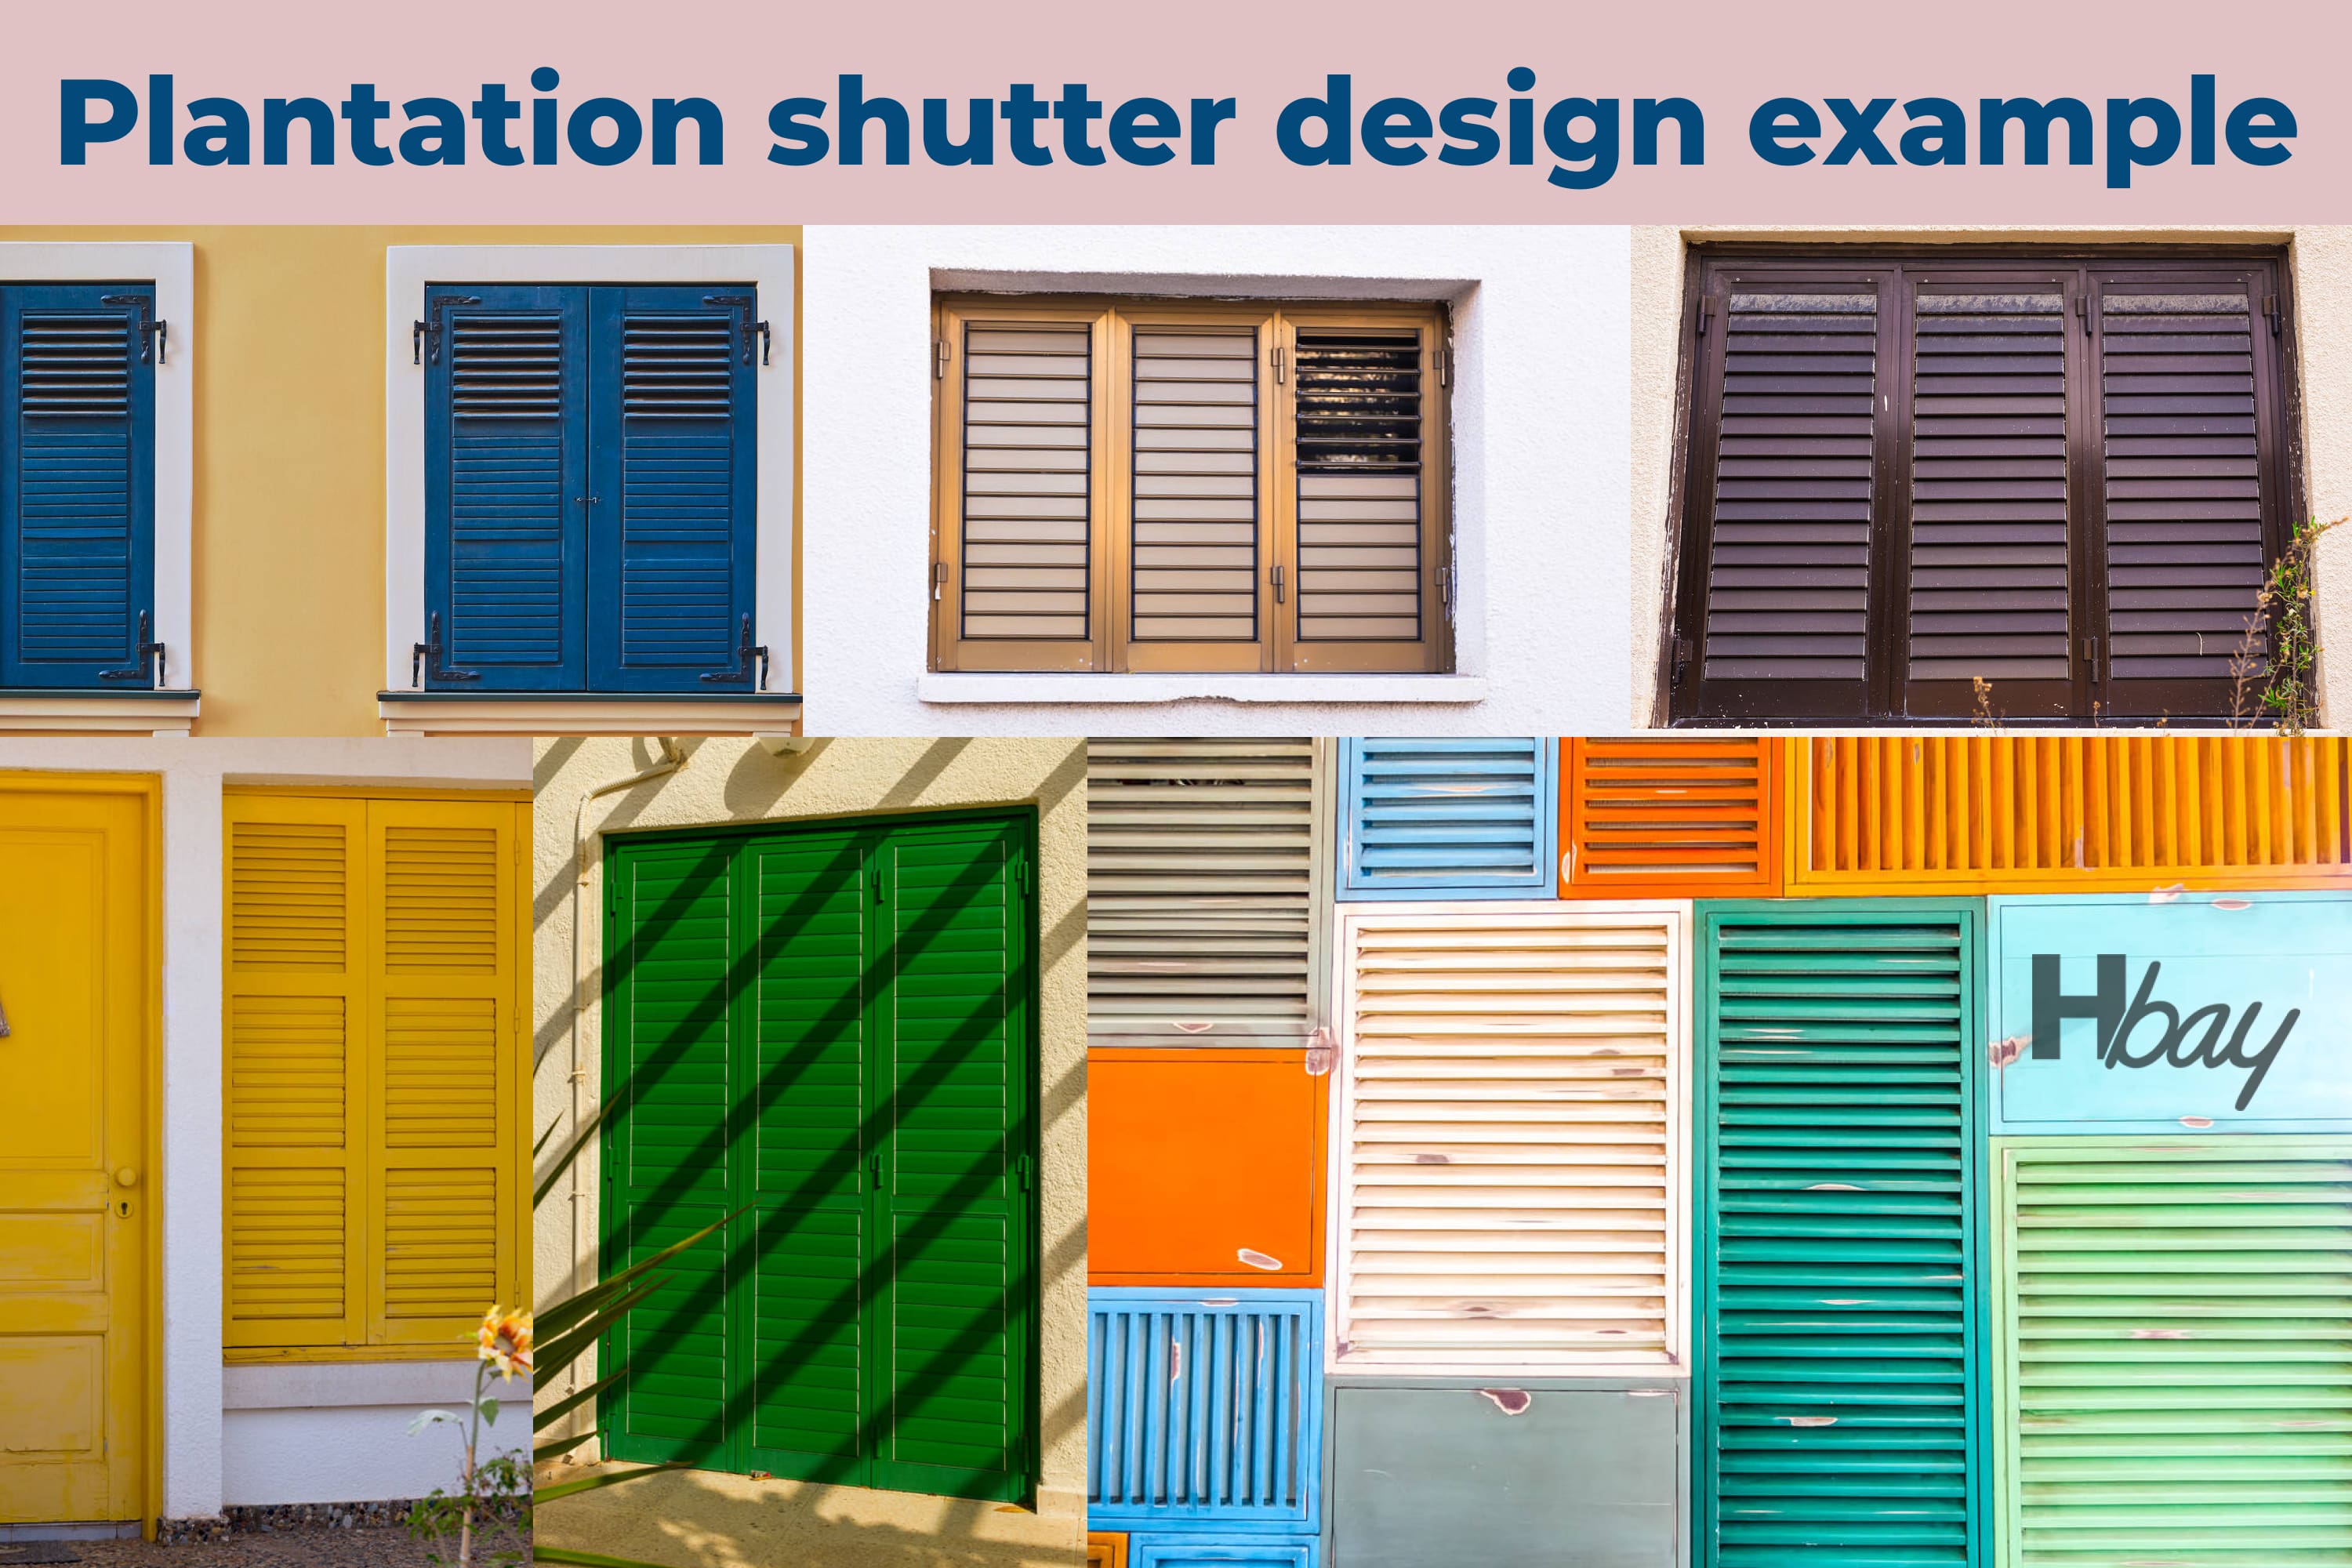 Plantation shutter design examplE